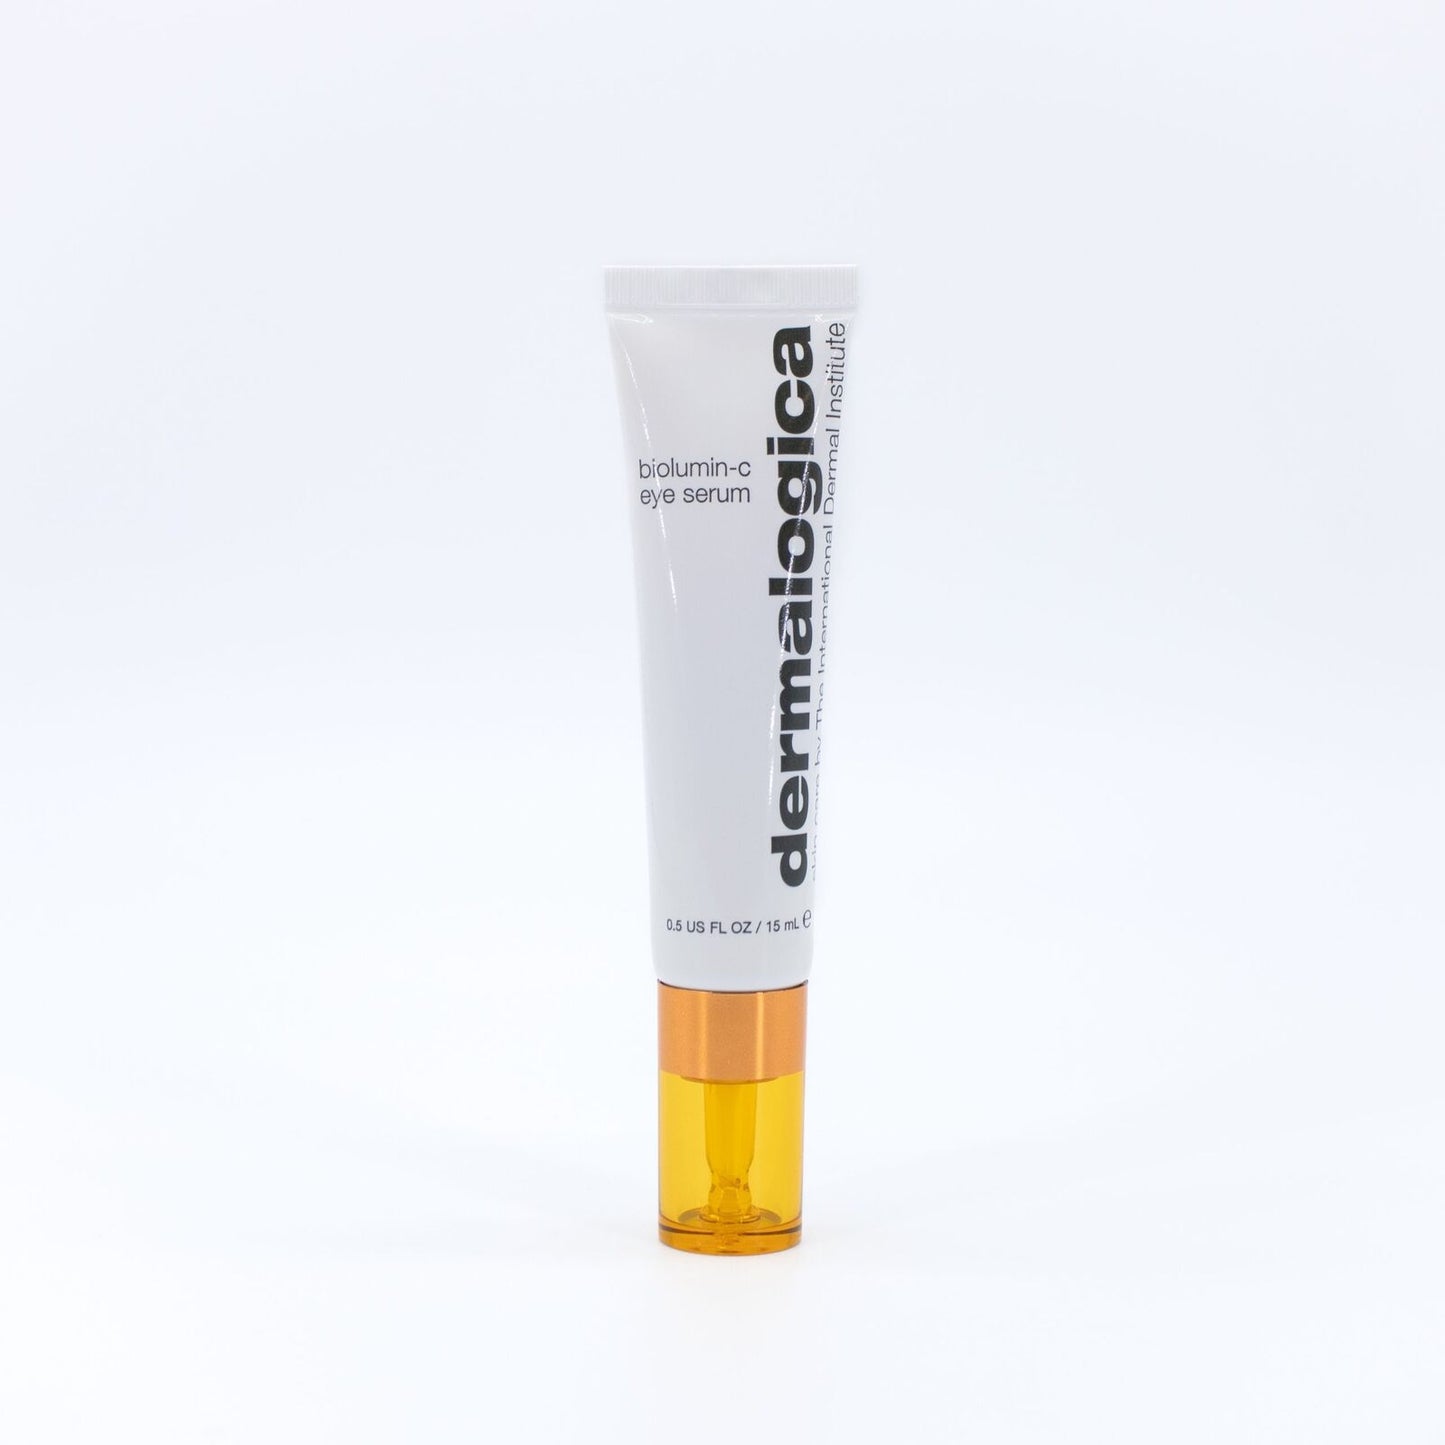 dermalogica Biolumin-C Vitamin C Eye Serum 0.5 oz - Imperfect Box